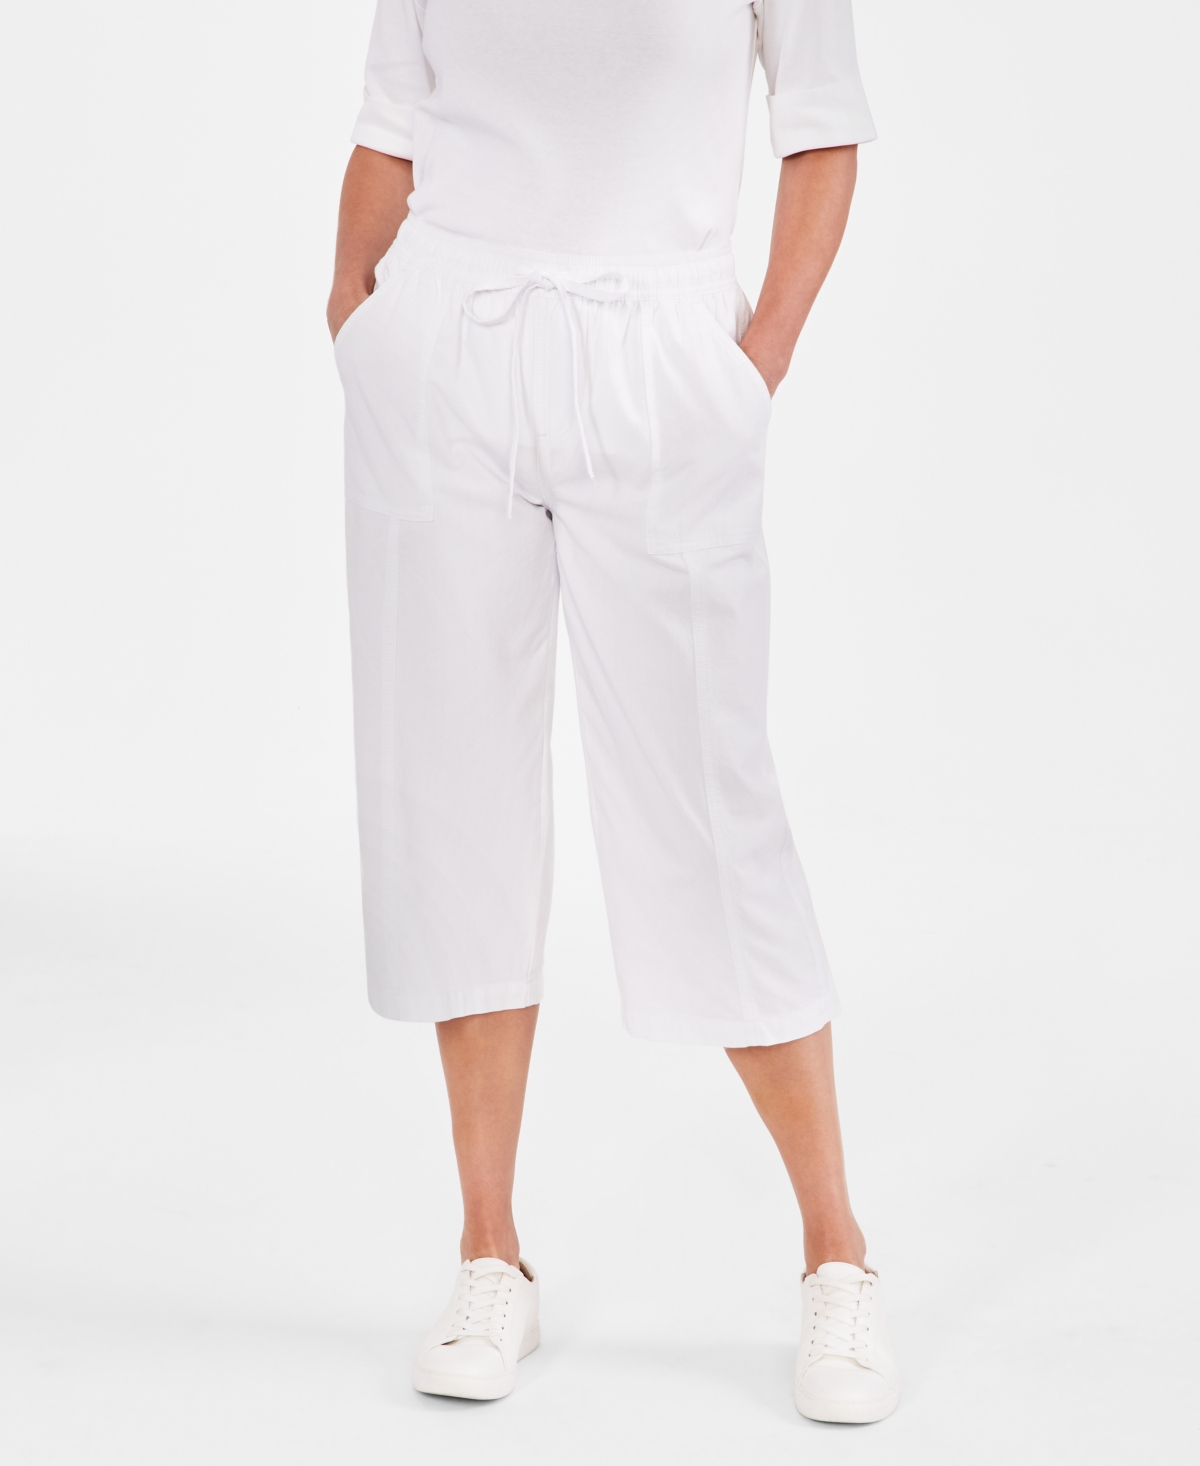 Style & Co Women's Drawstring Capri Pants, Regular & Petite, Created For Macy's In Bright White